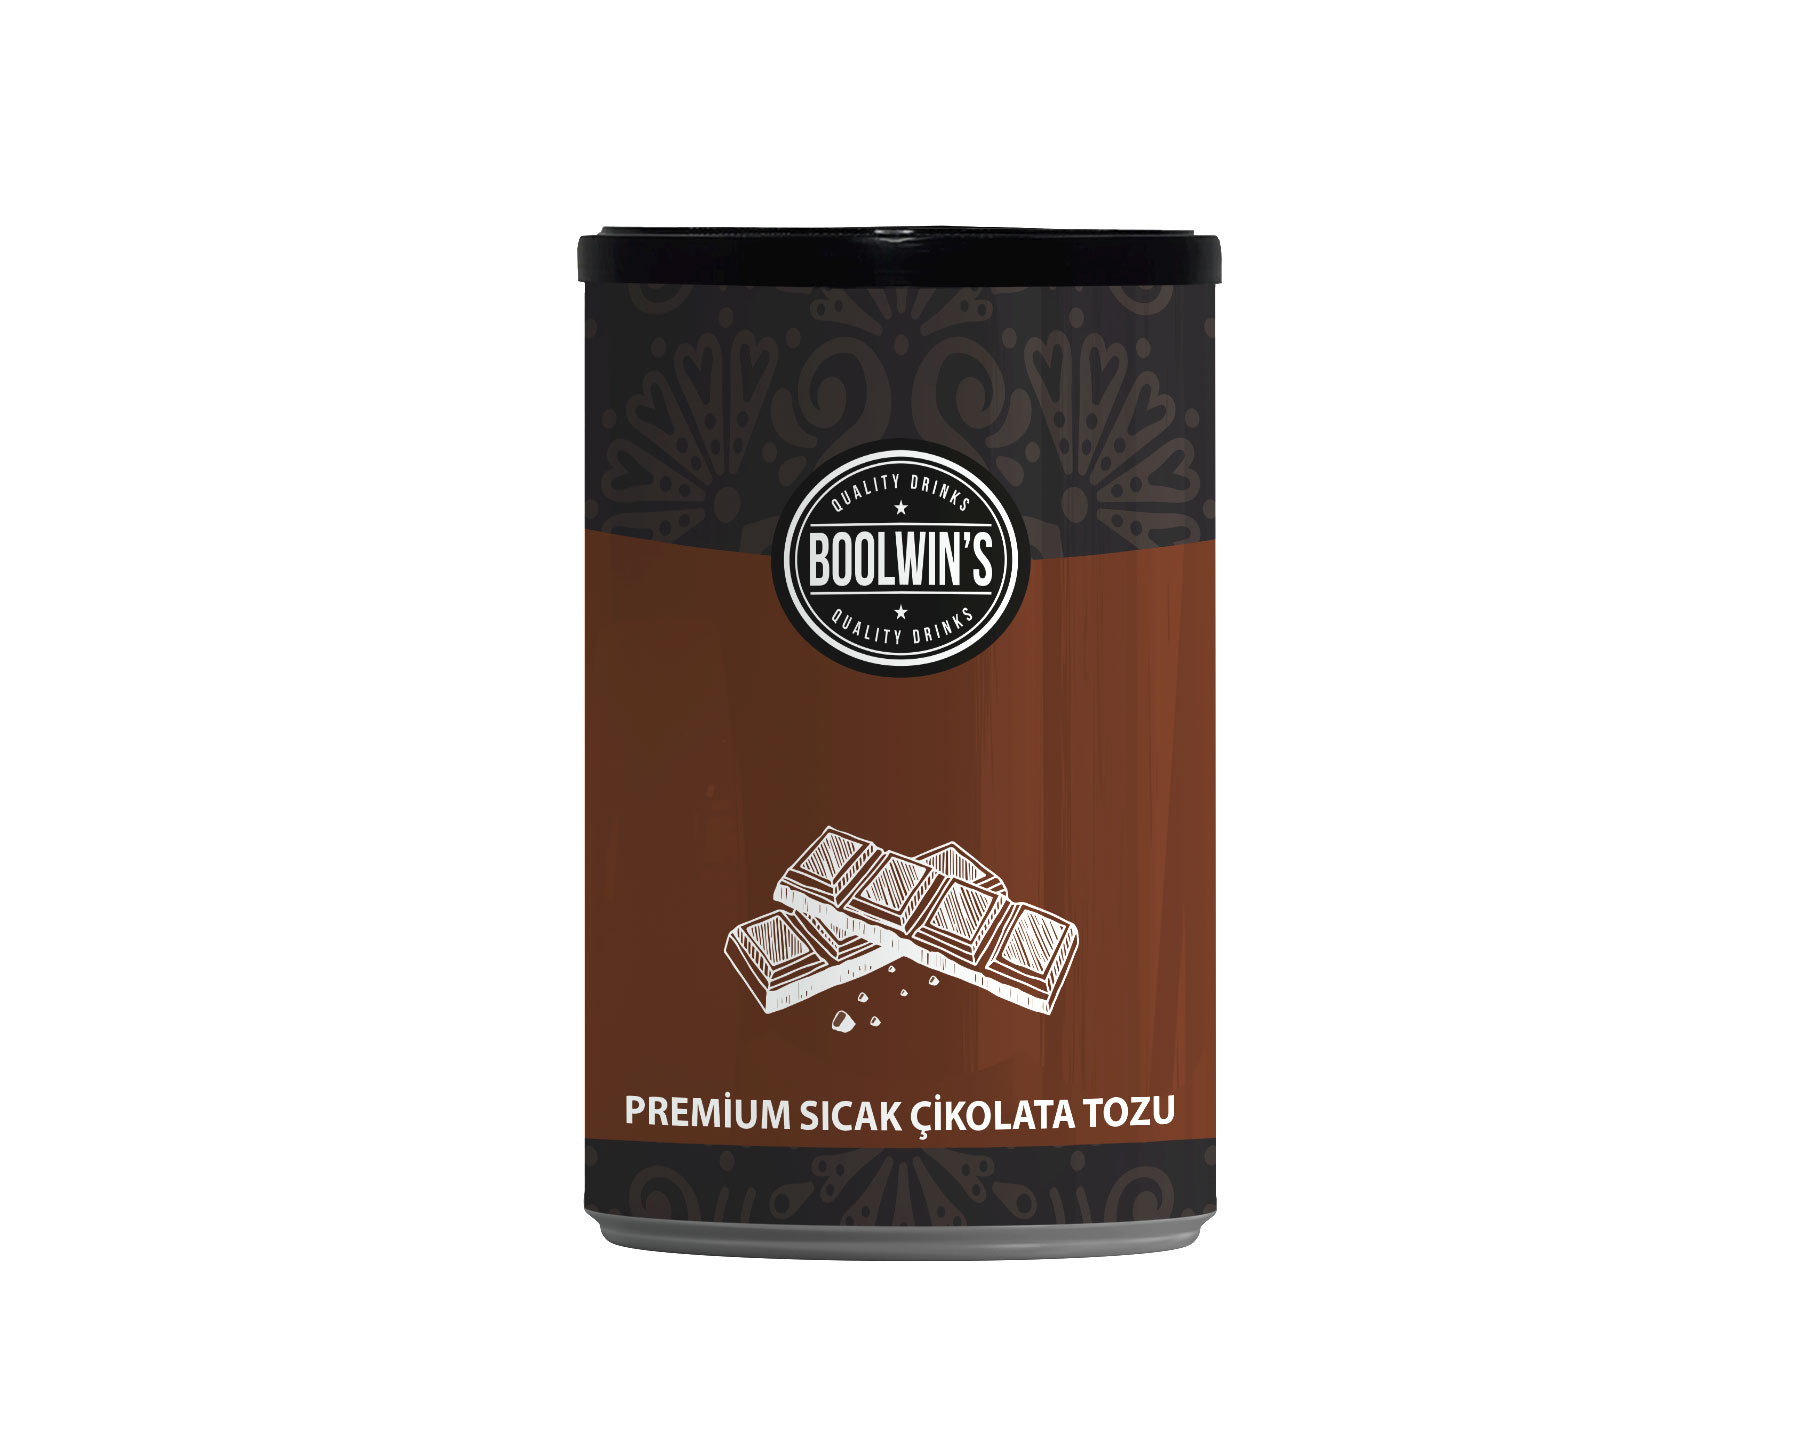 Premium Sıcak Çikolata